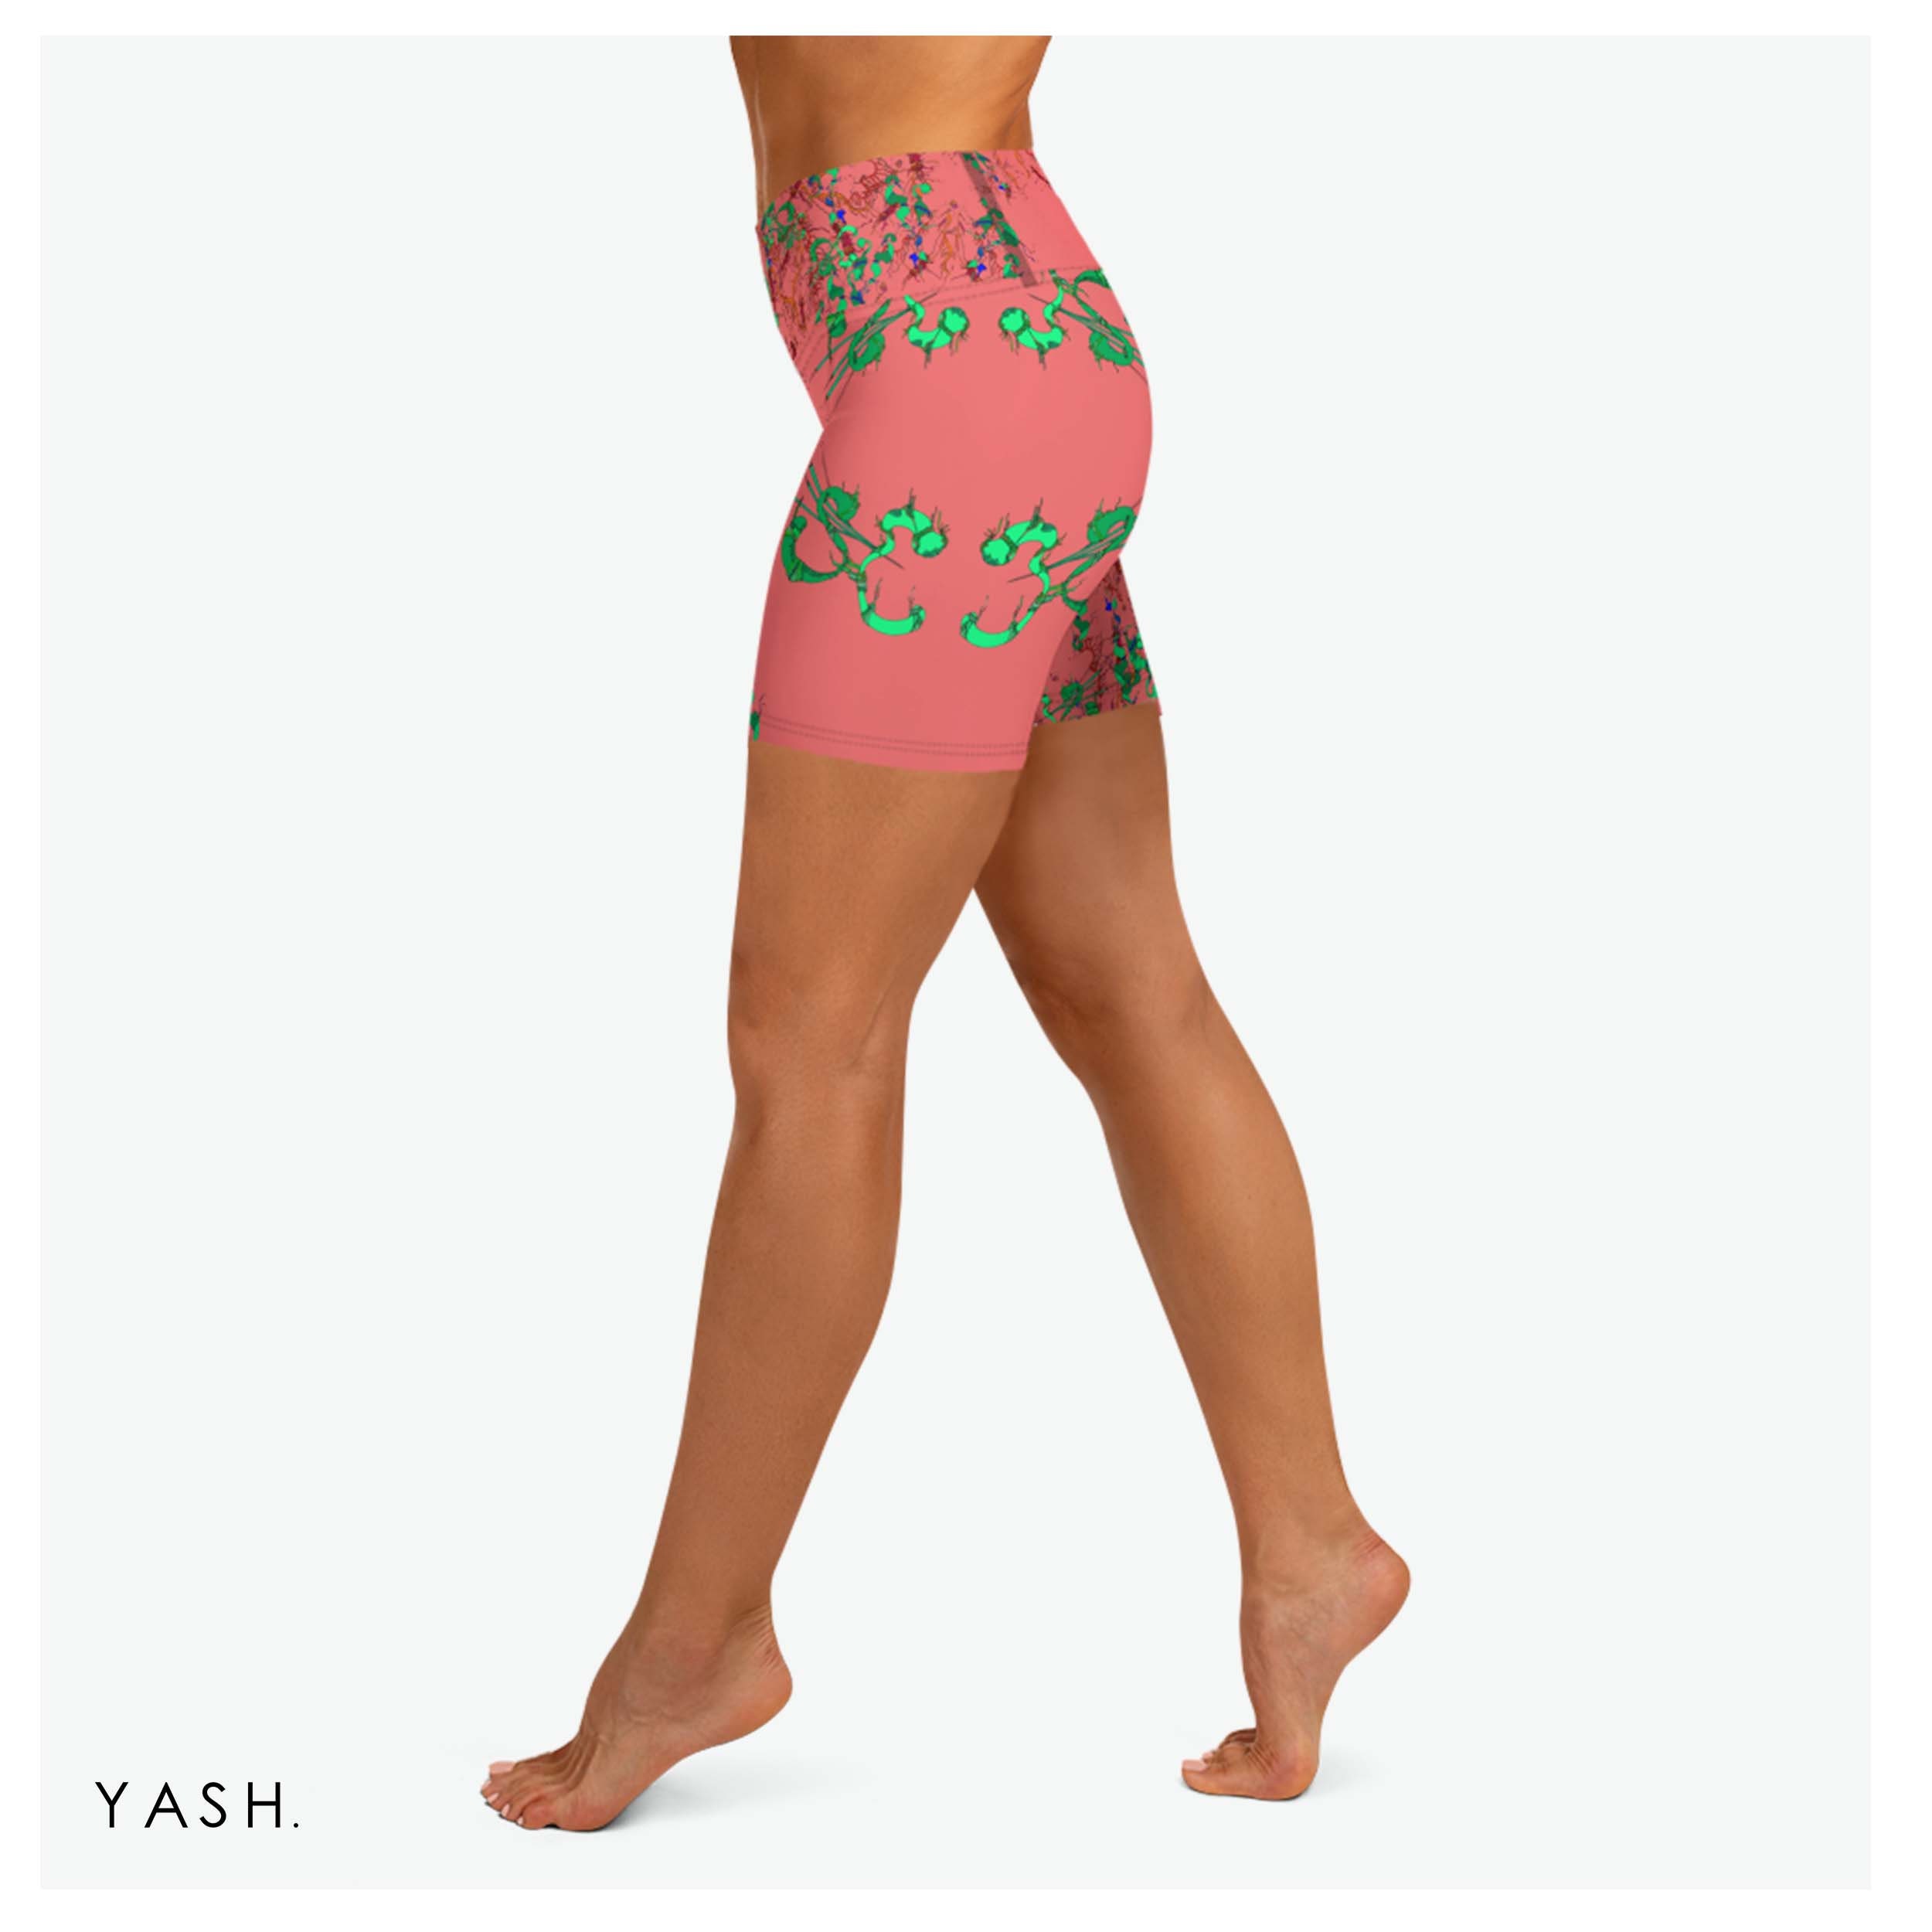 Yoga Short Leggings With Pink LI Print, Athletic Shorts, Printed